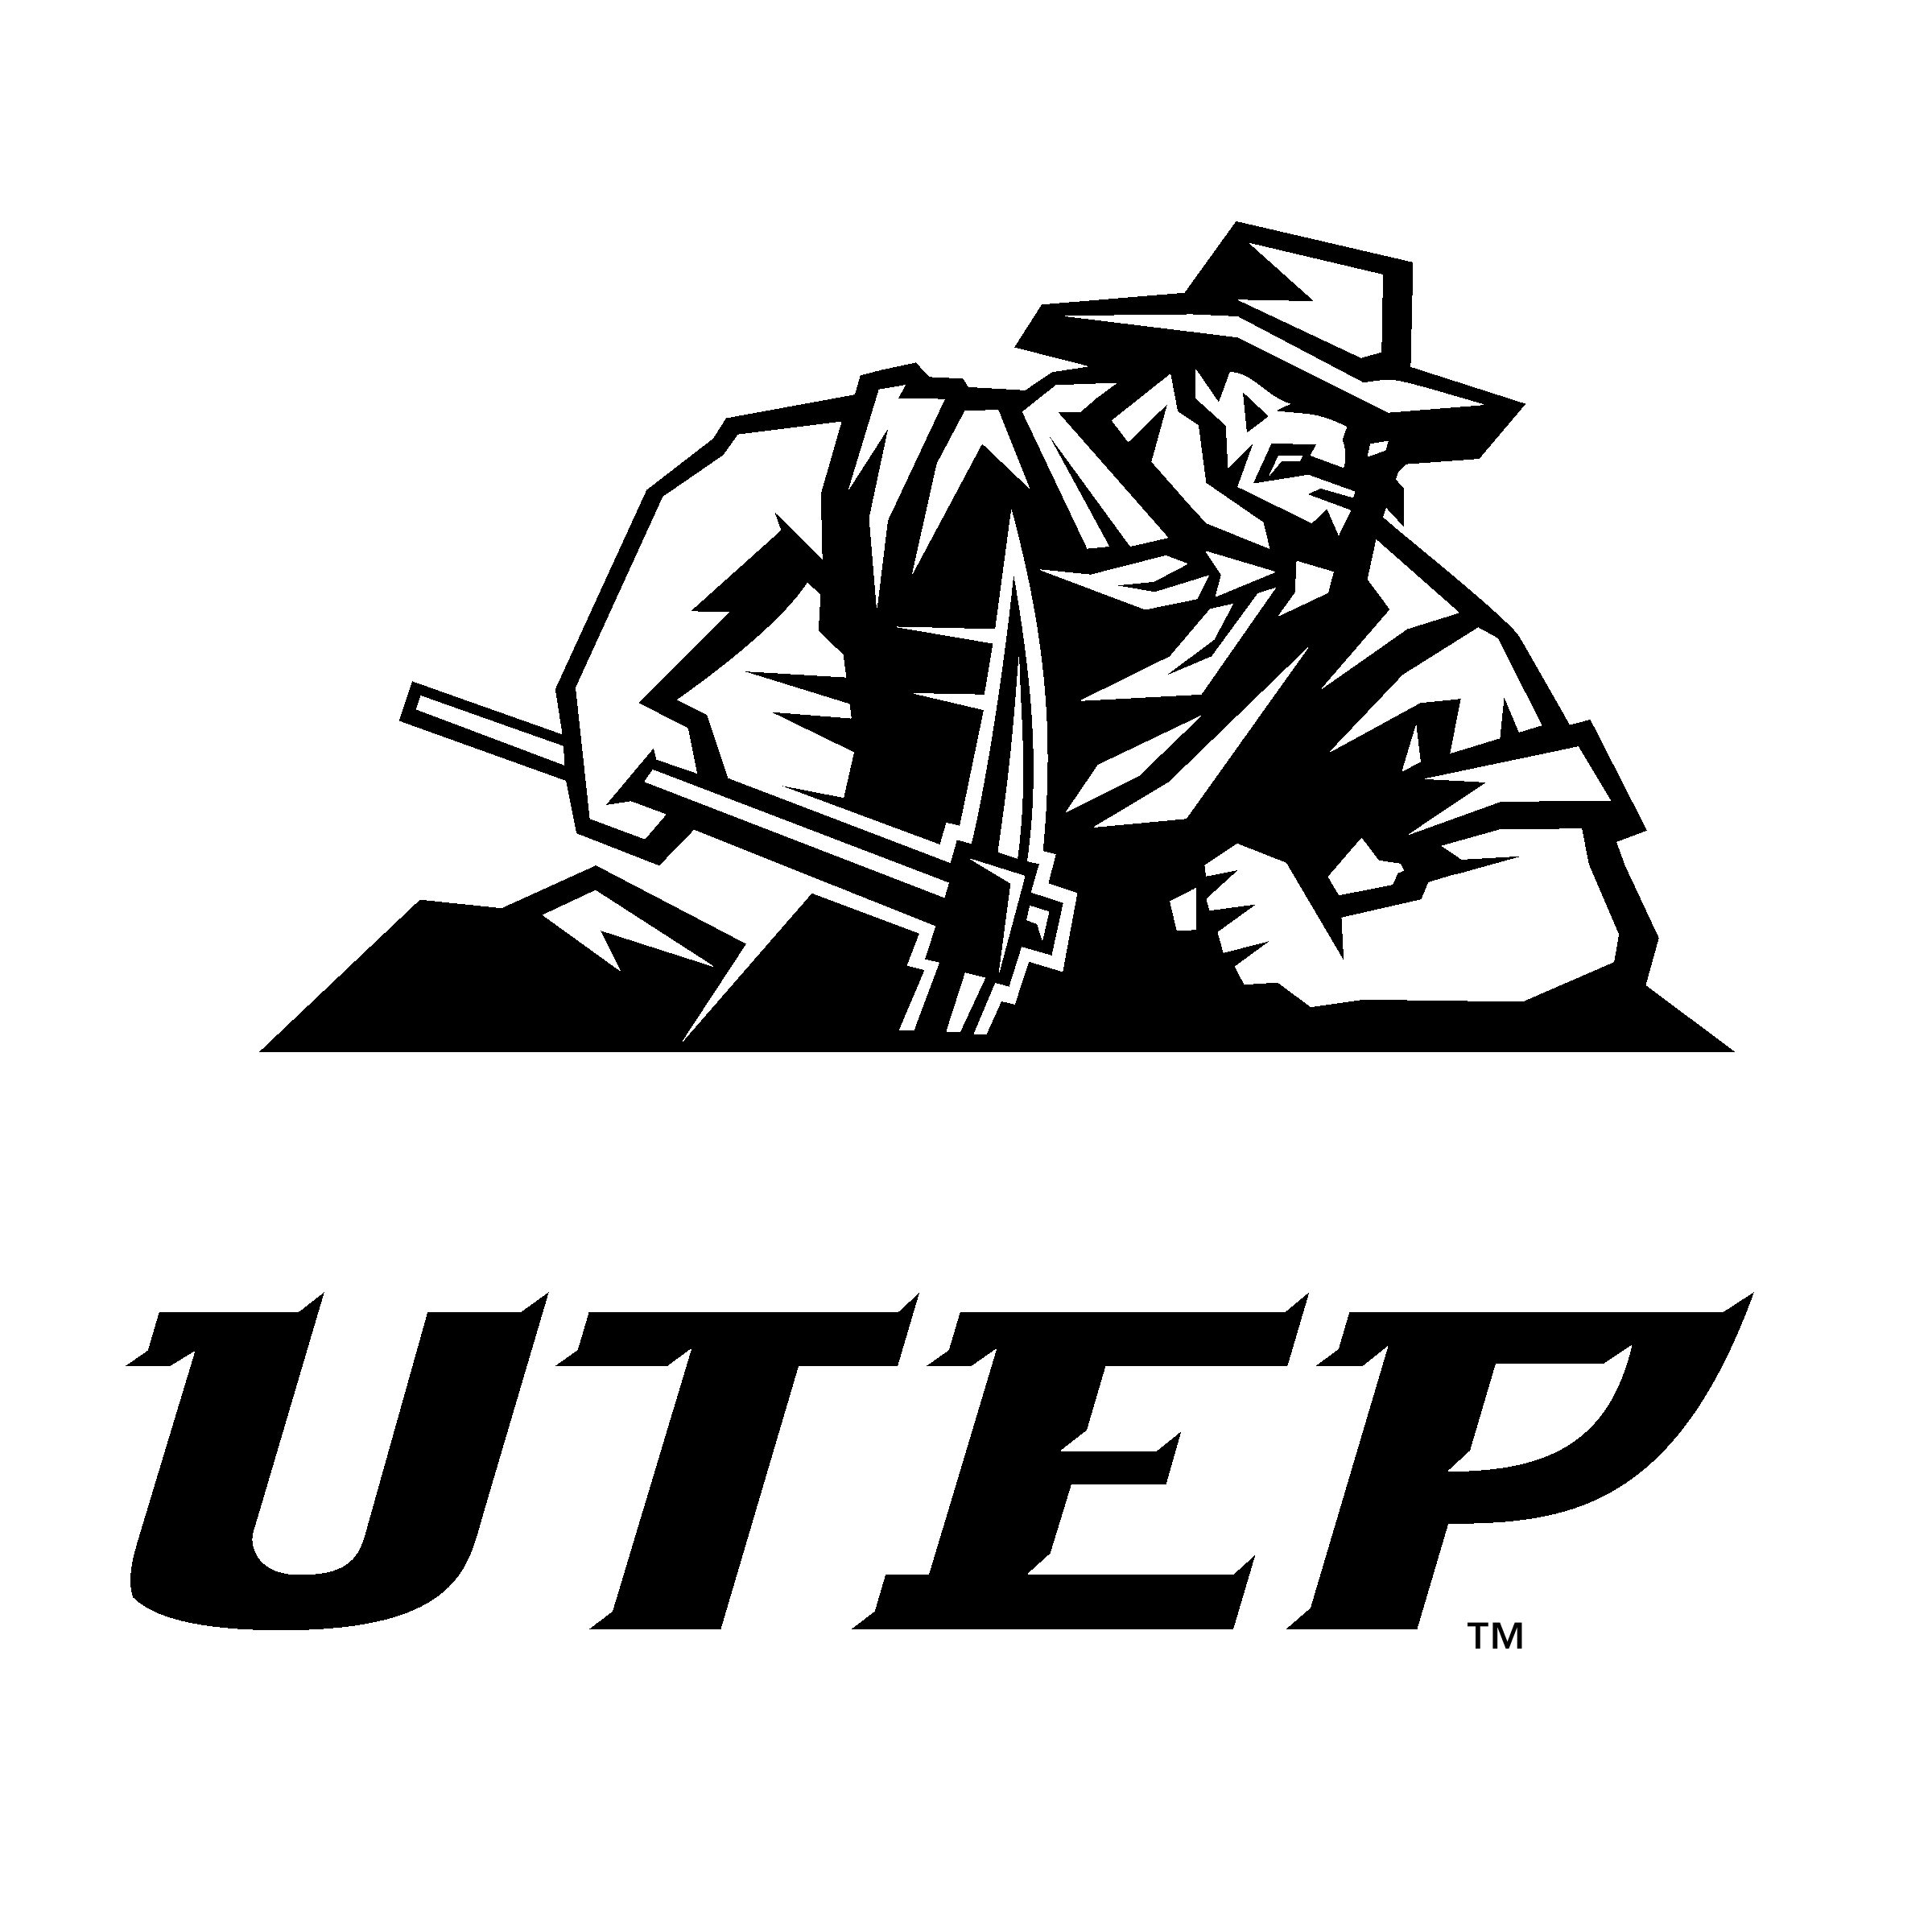 UTEP Logo - UTEP Miners Logo PNG Transparent & SVG Vector - Freebie Supply